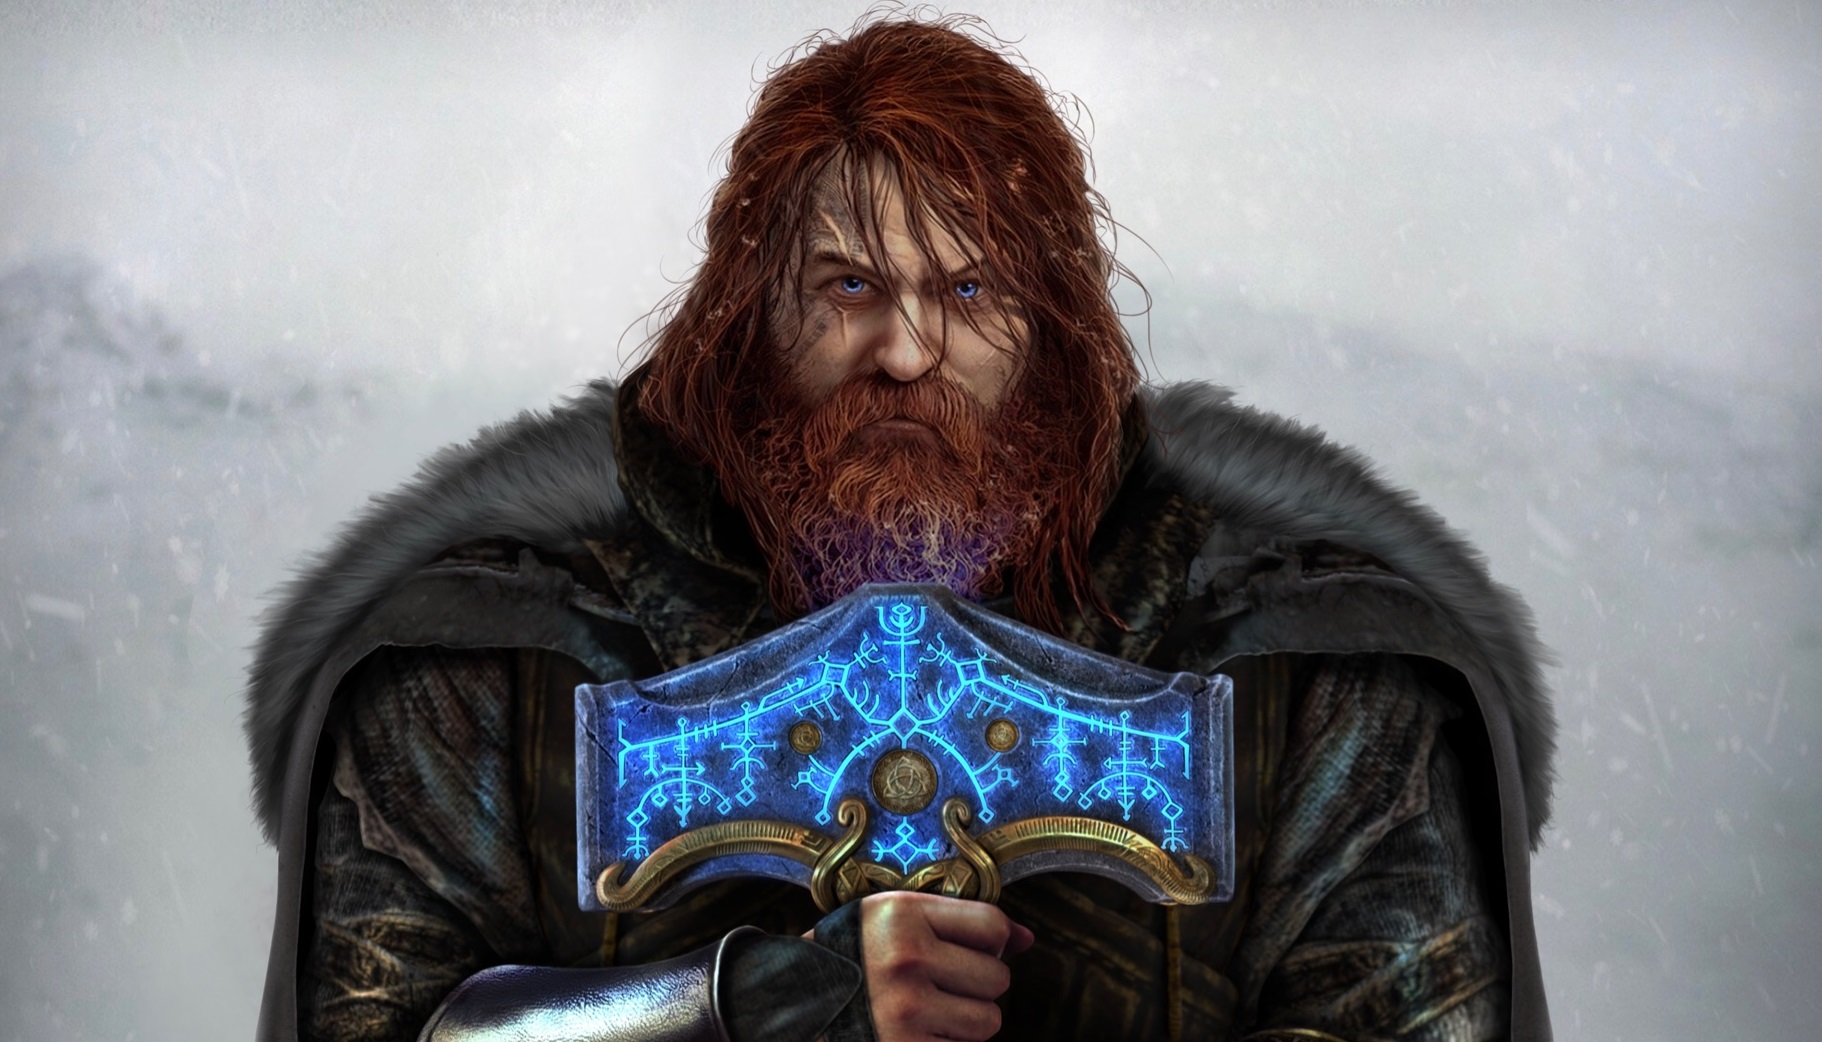 God of War Ragnarok’s PC reveal is imminent, leaker claims